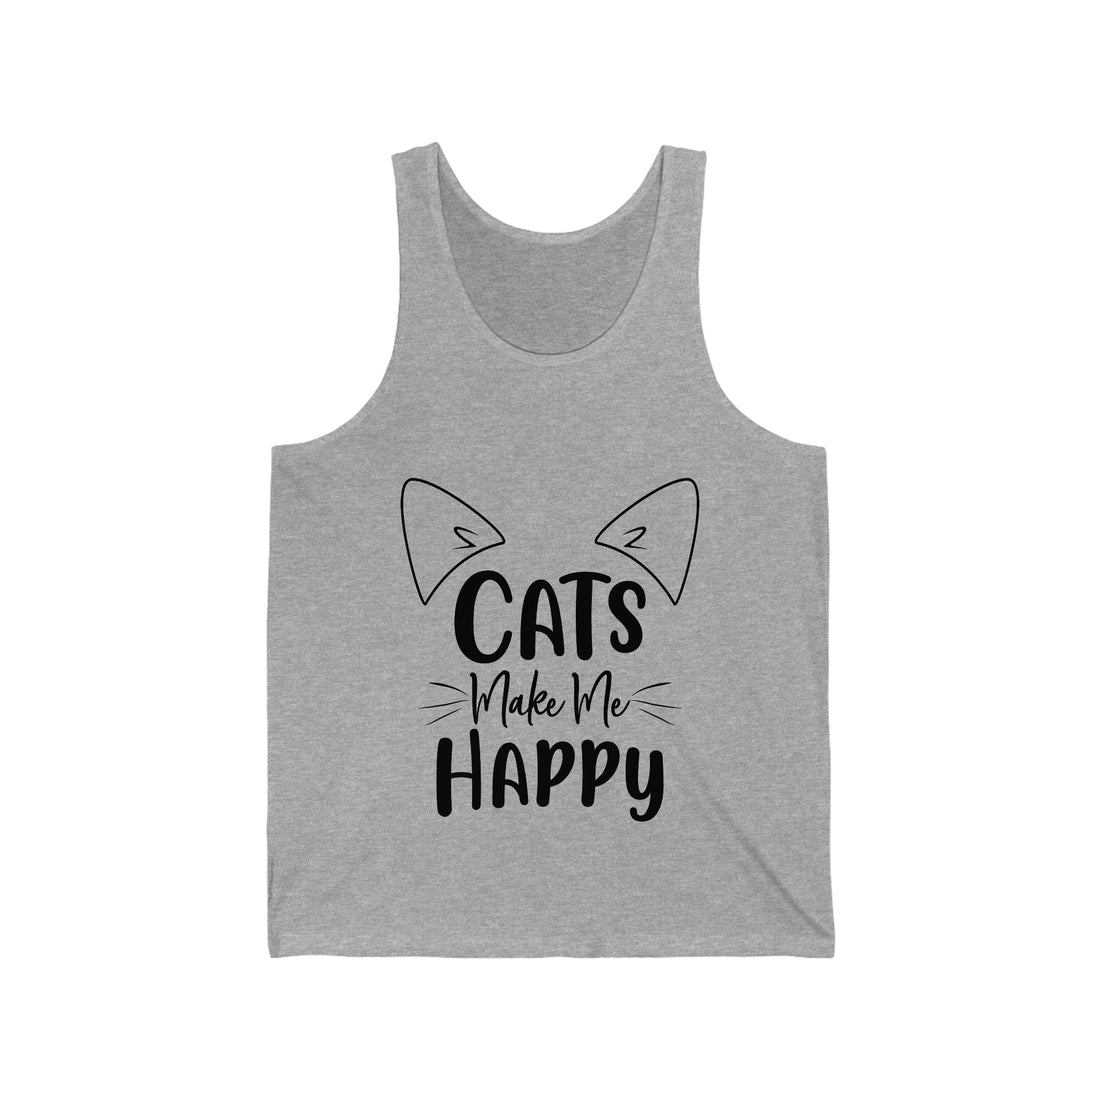 Cats Make Me Happy - Unisex Jersey Tank Top